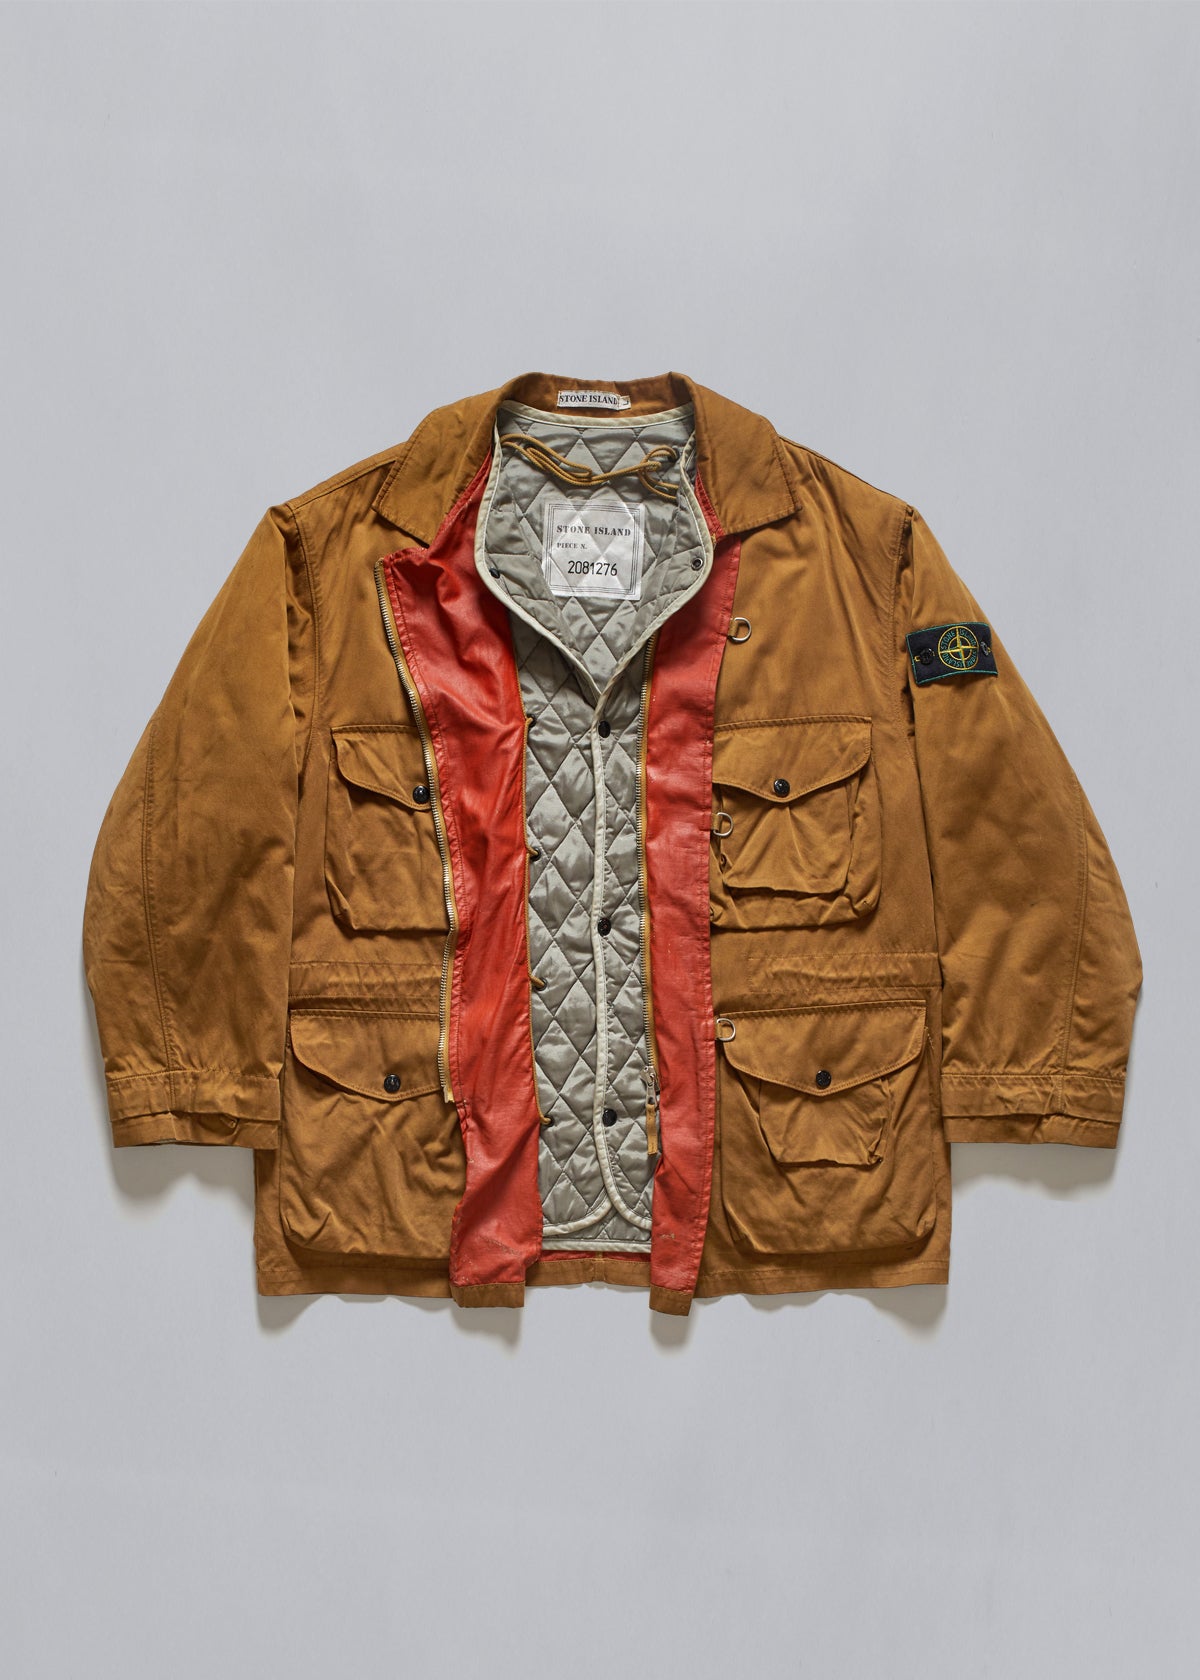 Raso Gommato Coat SS1991 - Large - The Archivist Store